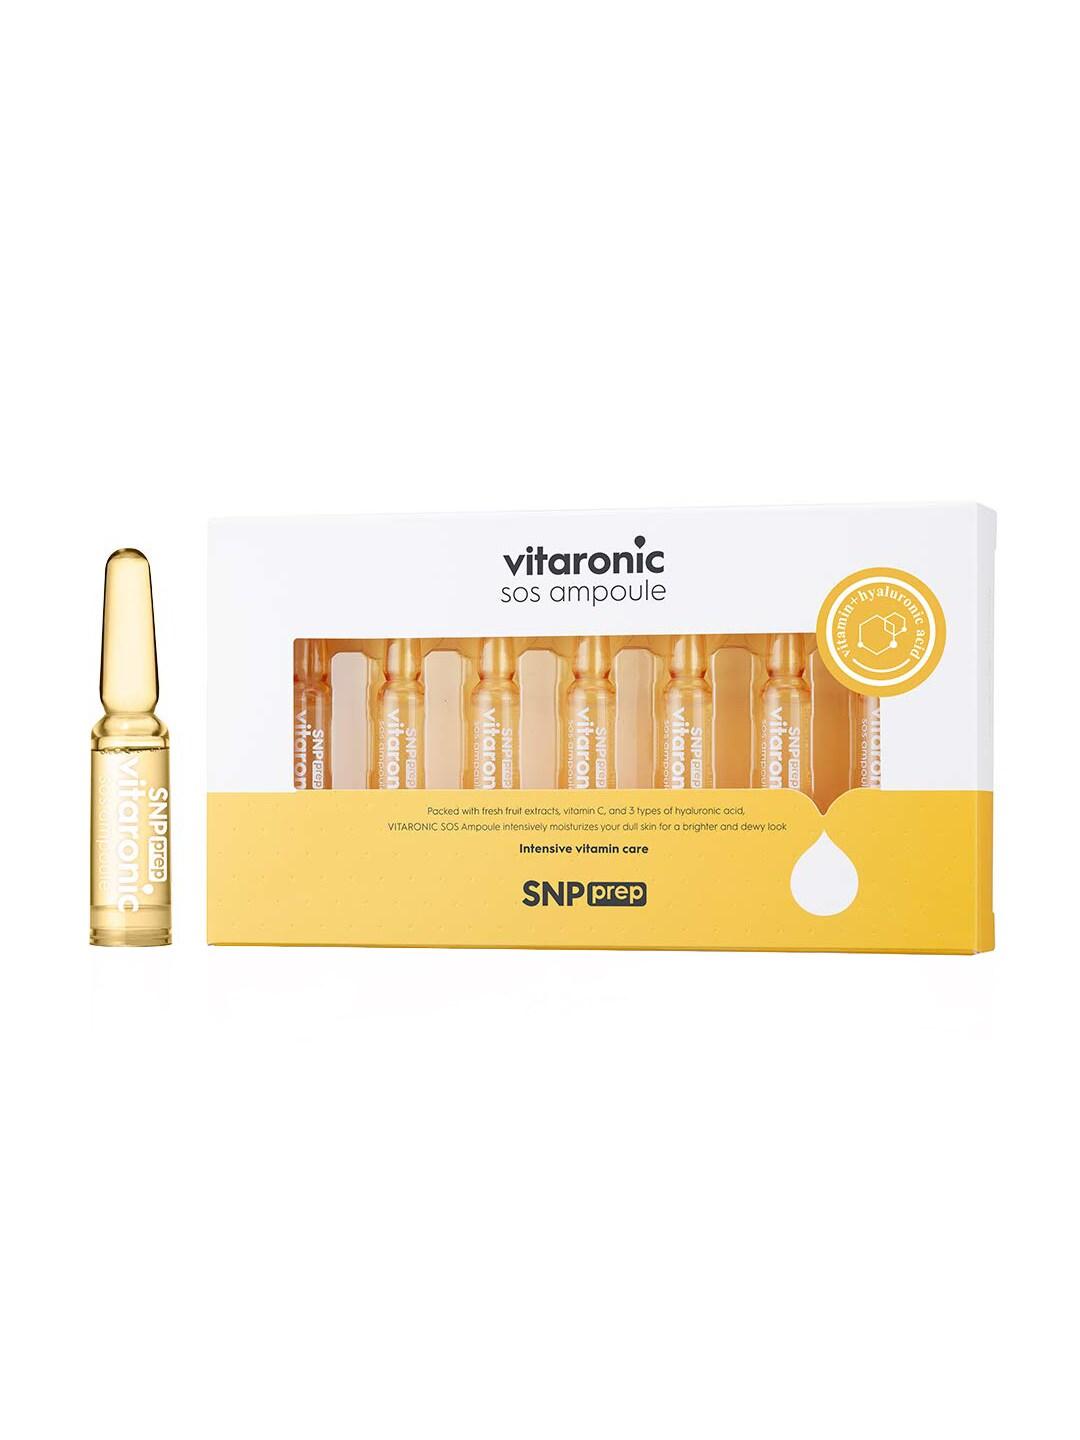 SNP Prep Vitaronic SOS Ampoule with Vitamin Complex & Hyaluronic Acid- 7 Vials- 1.5ml each